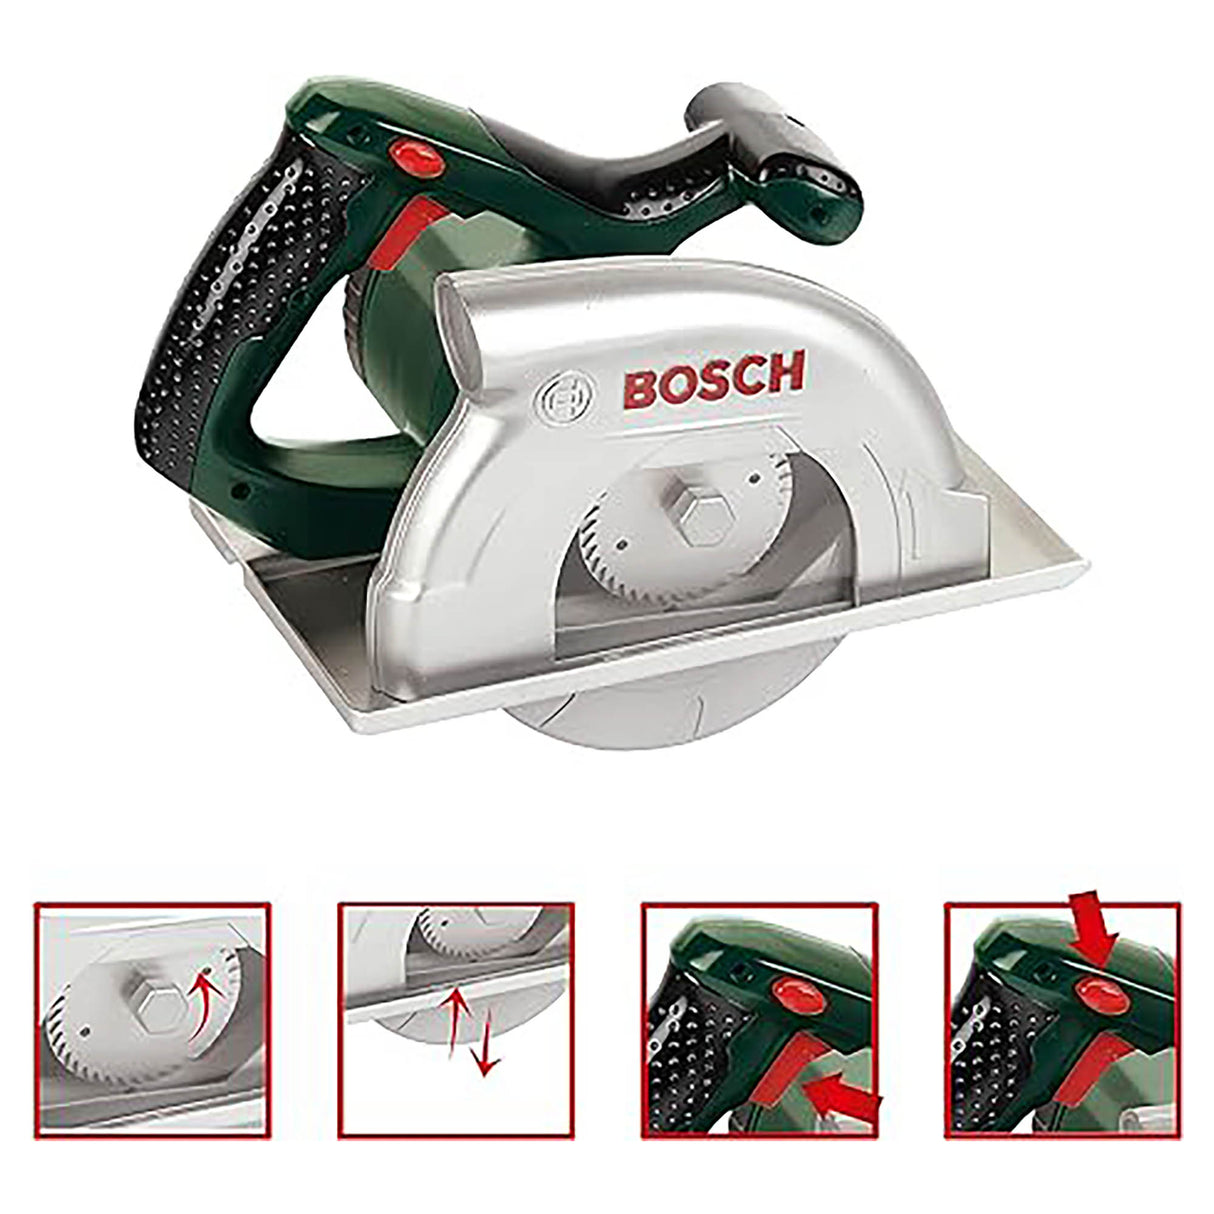 Bosch Mini Circular Saw